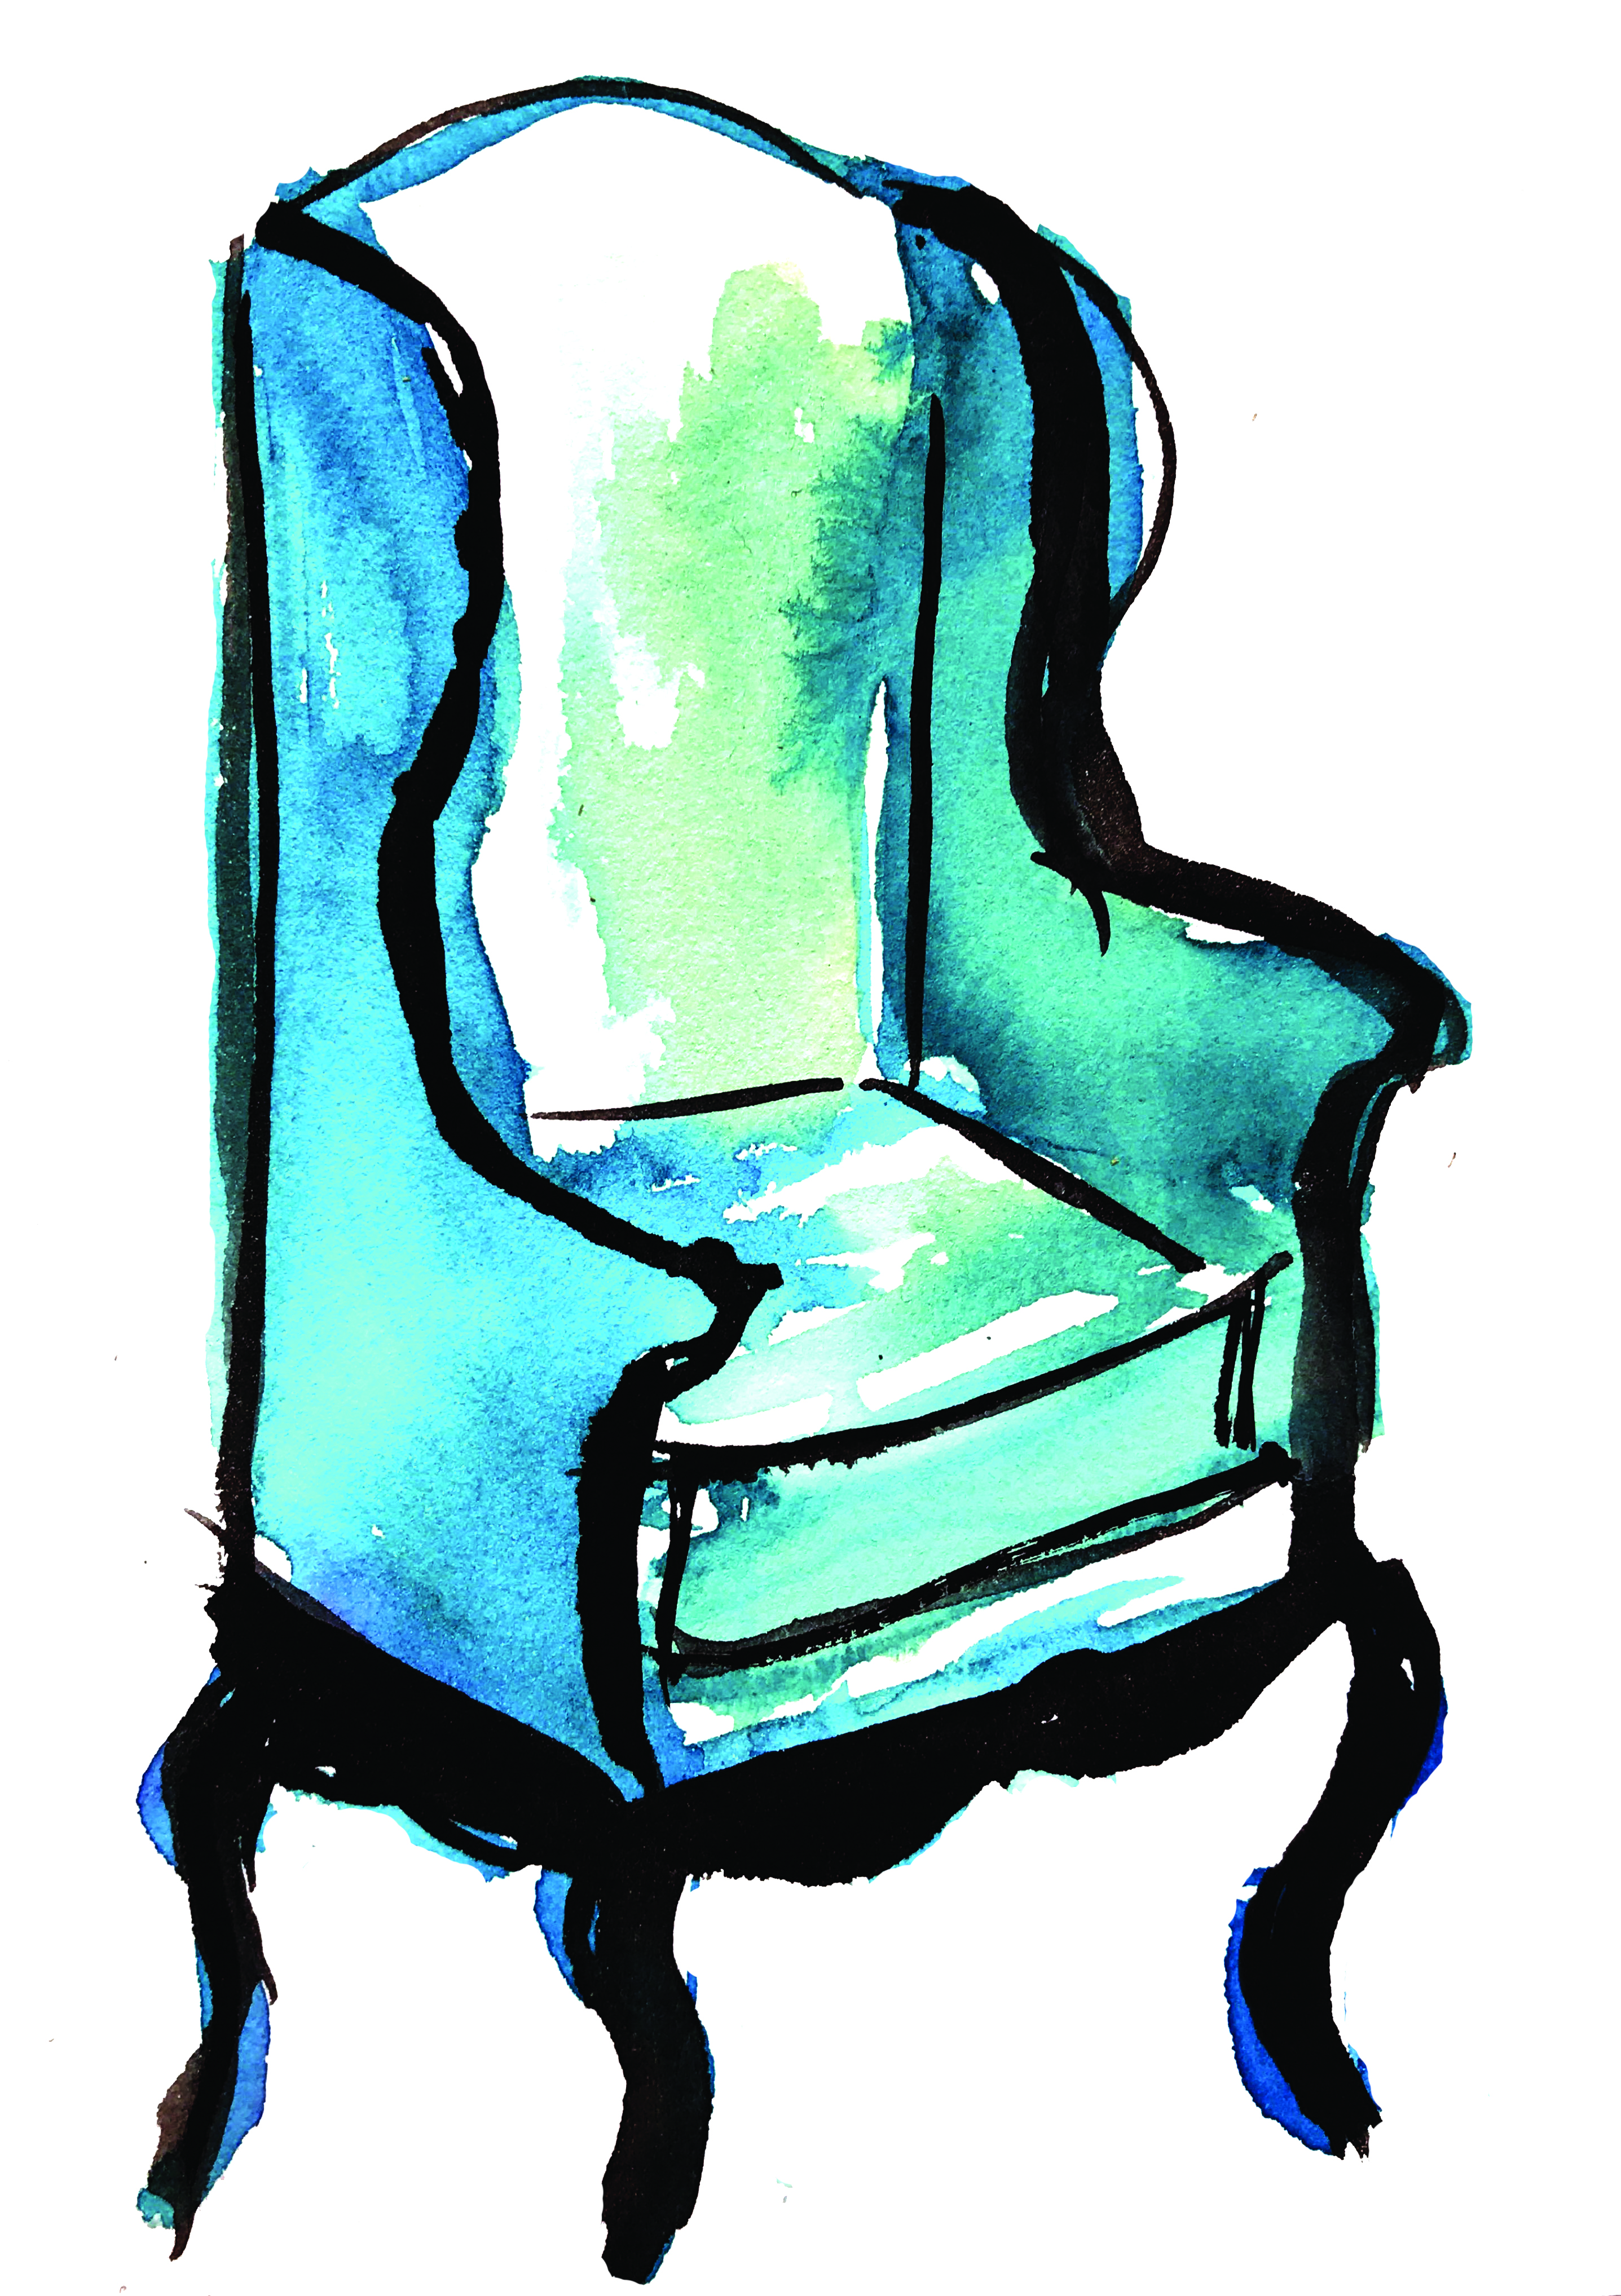 Chair Illustration